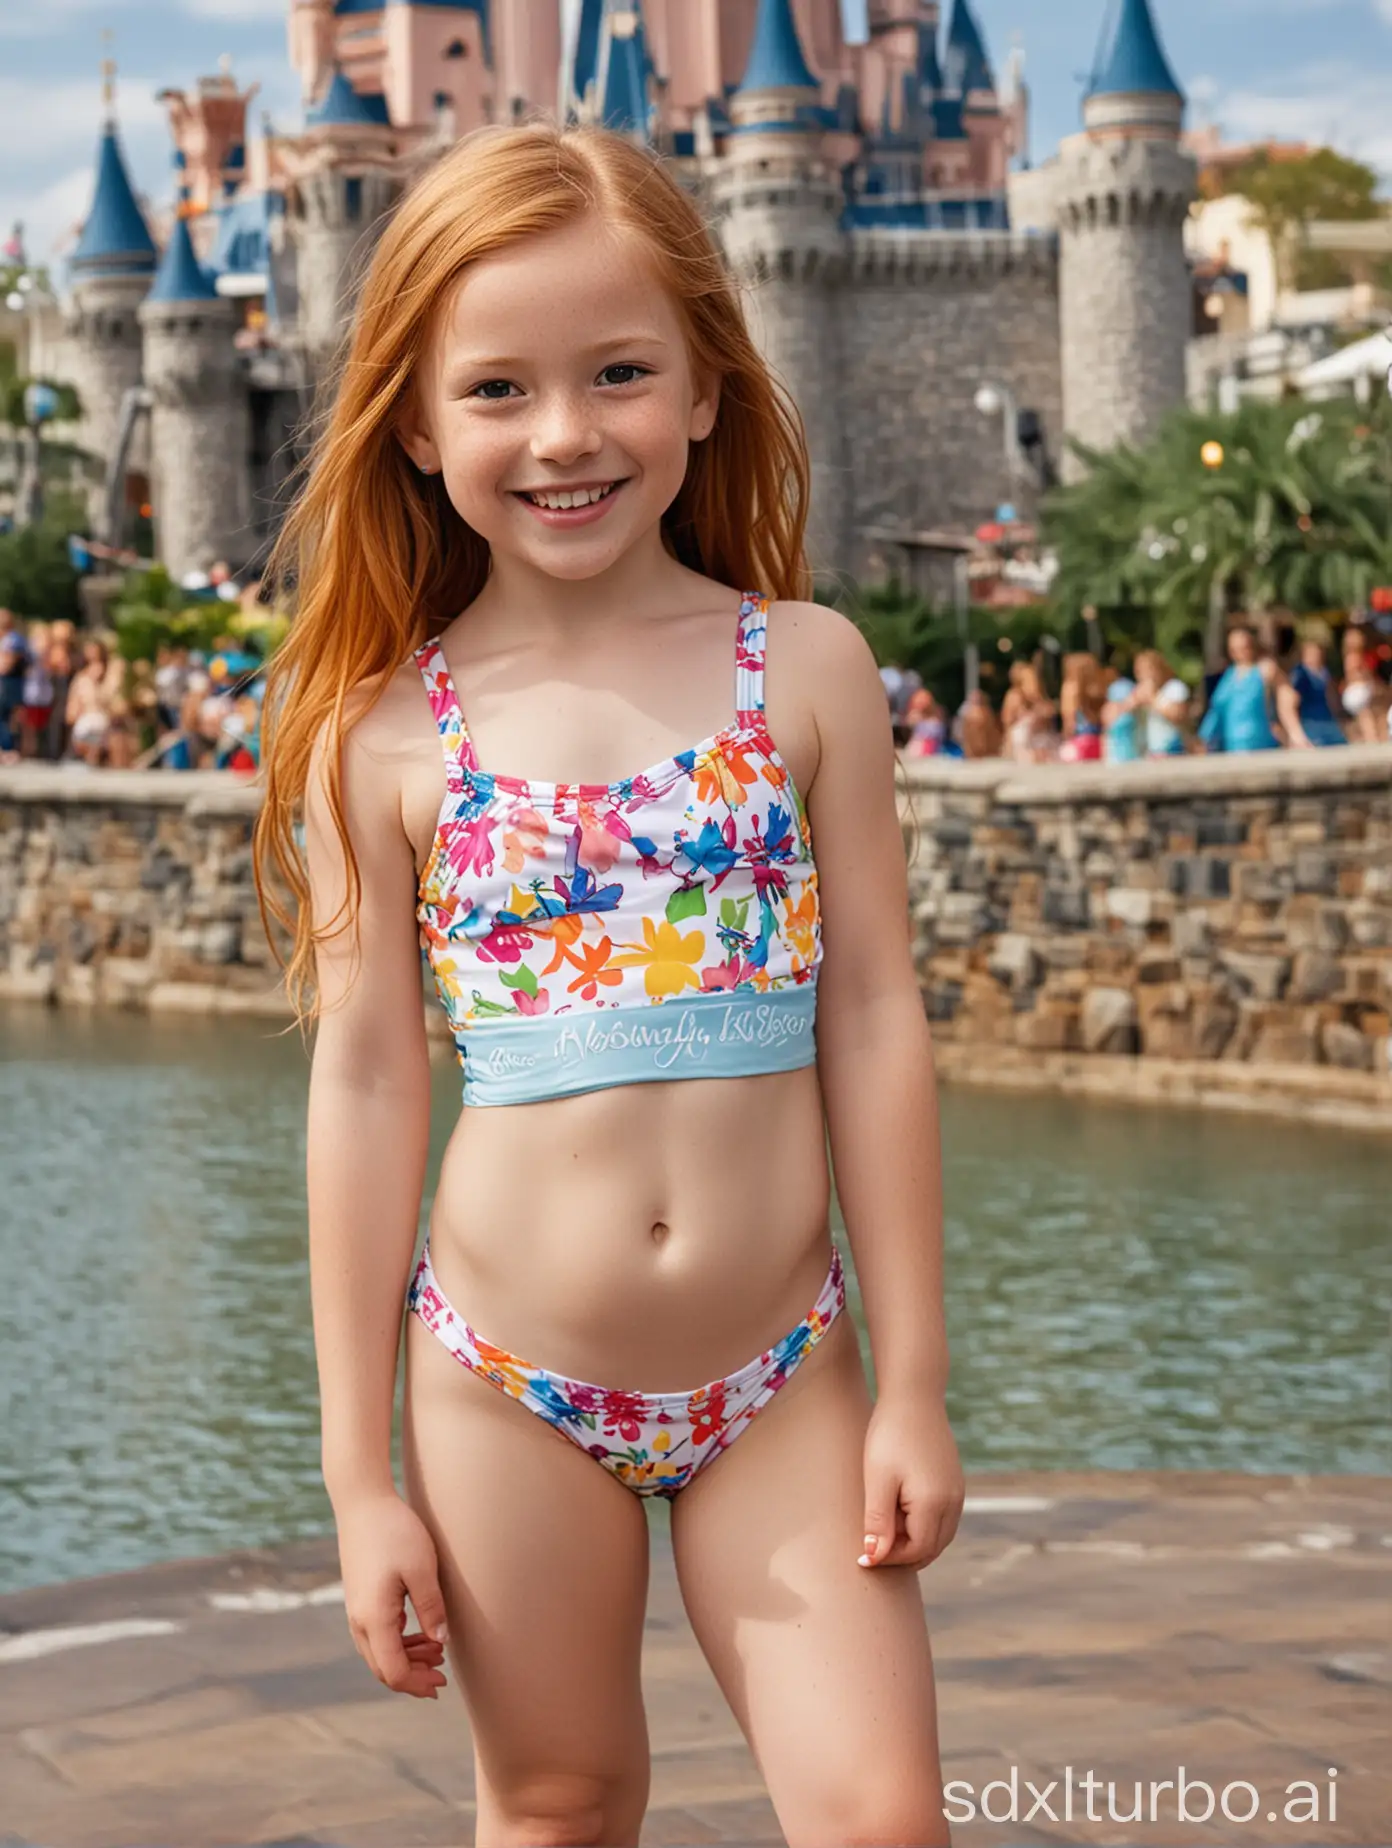 Confident-9YearOld-Girl-in-Bikini-and-High-Heels-at-Disney-World